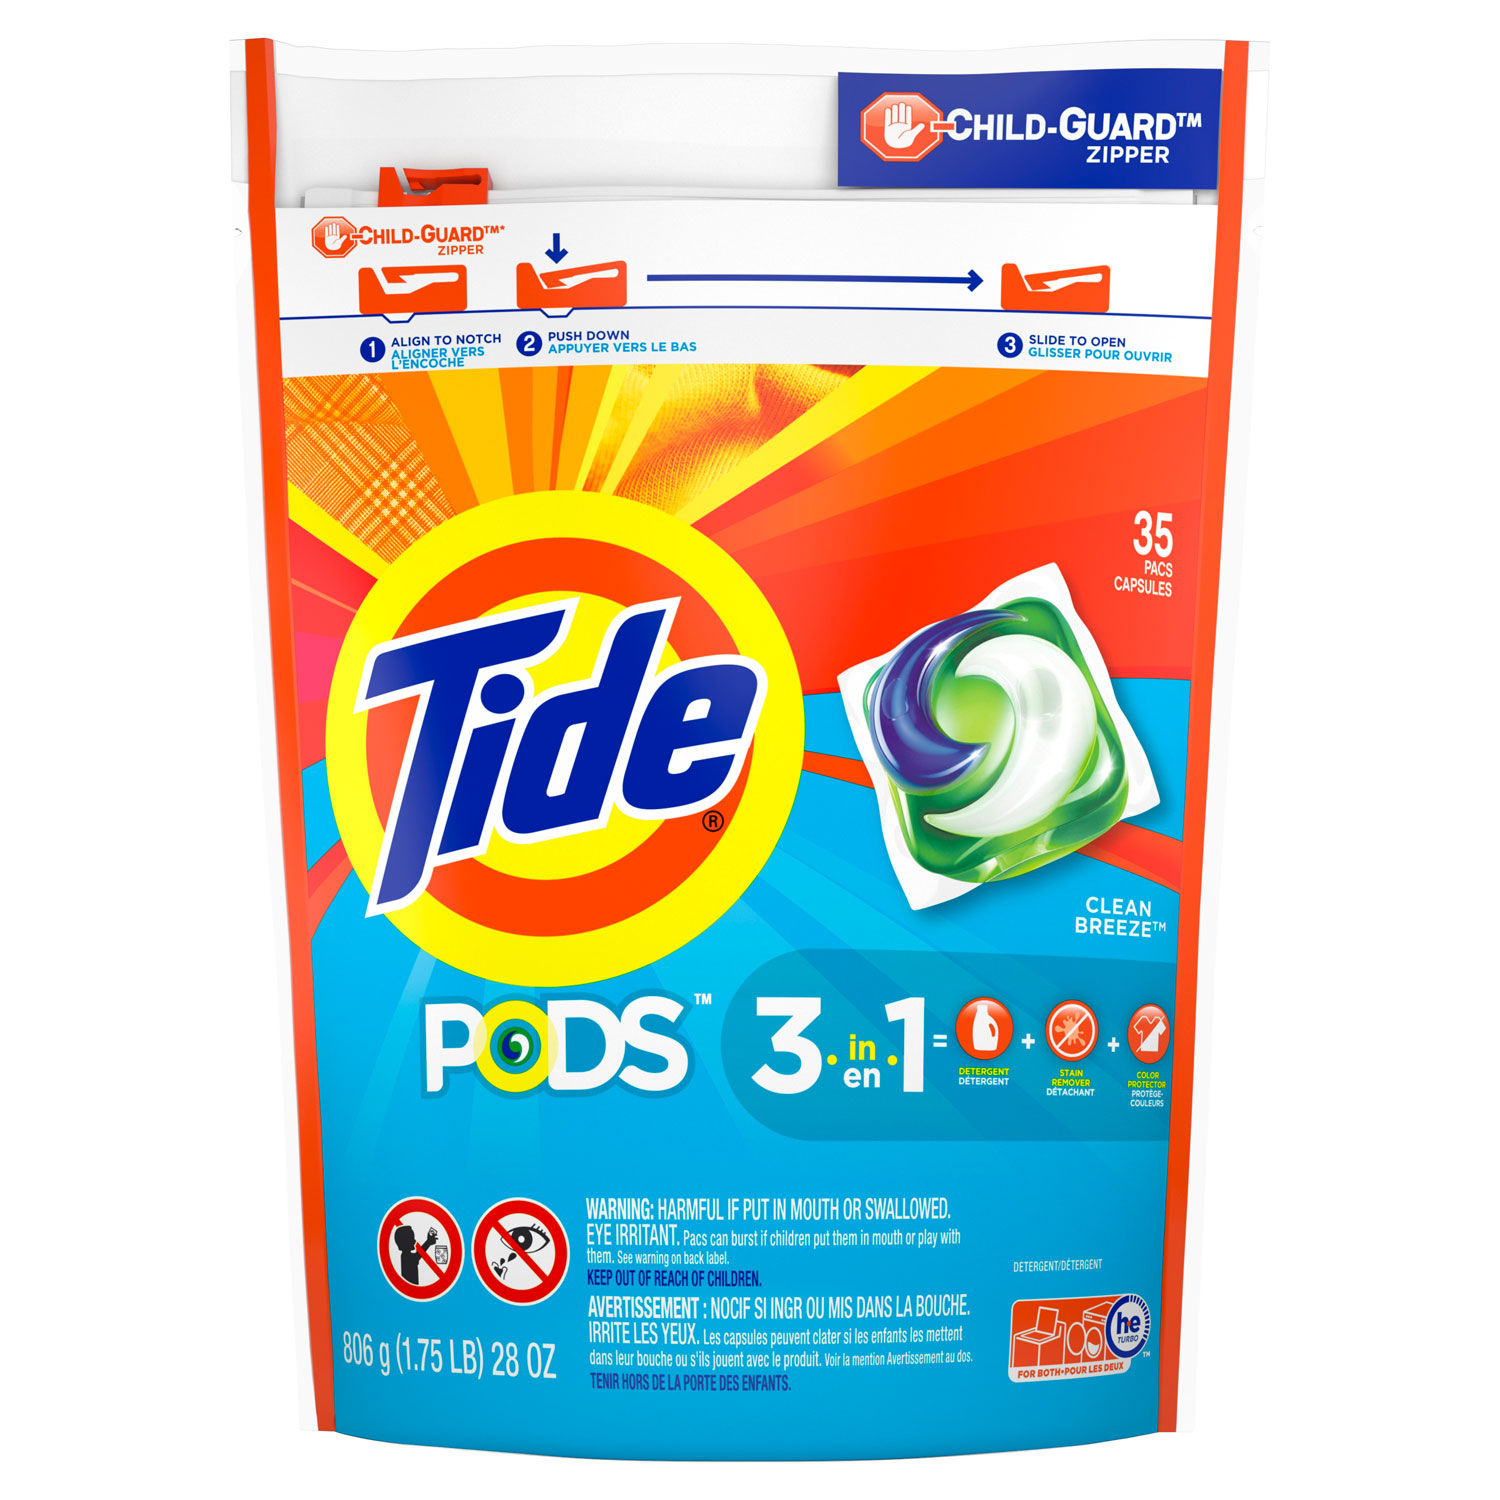 Pods Laundry Detergent, Clean Breeze, 35/Pack